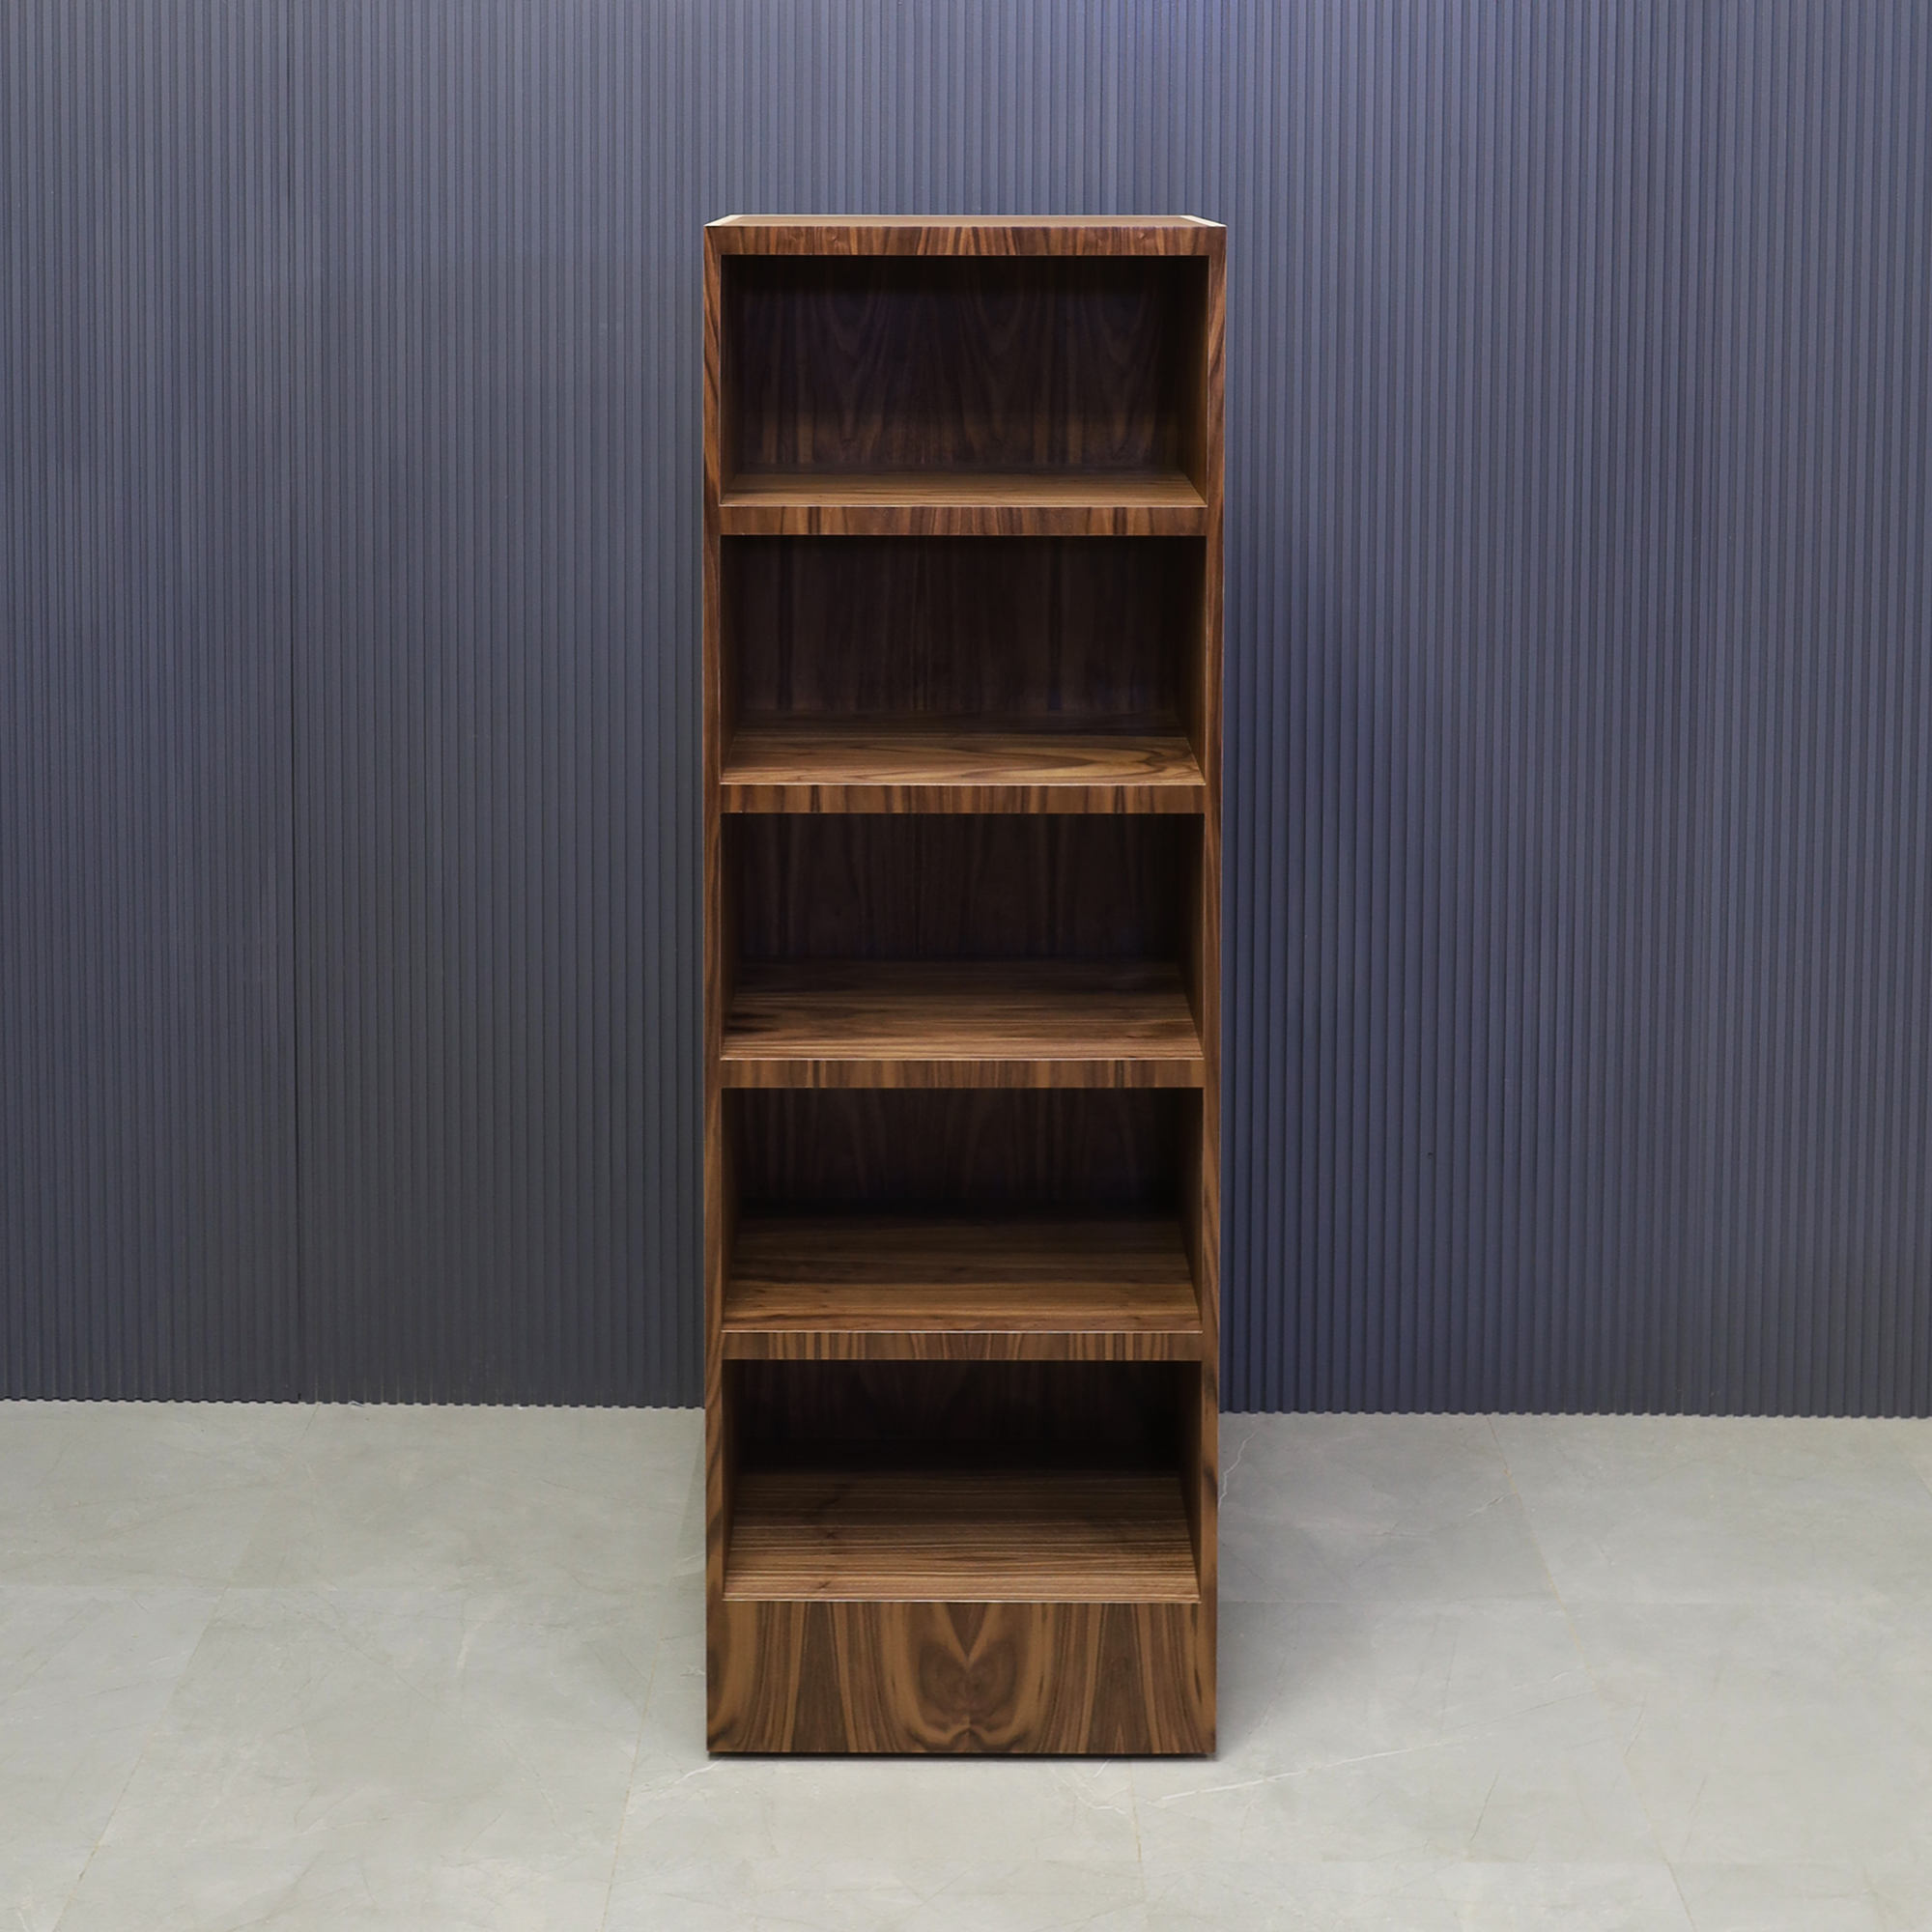 79-inch Bookshelf in american walnut, shown here.